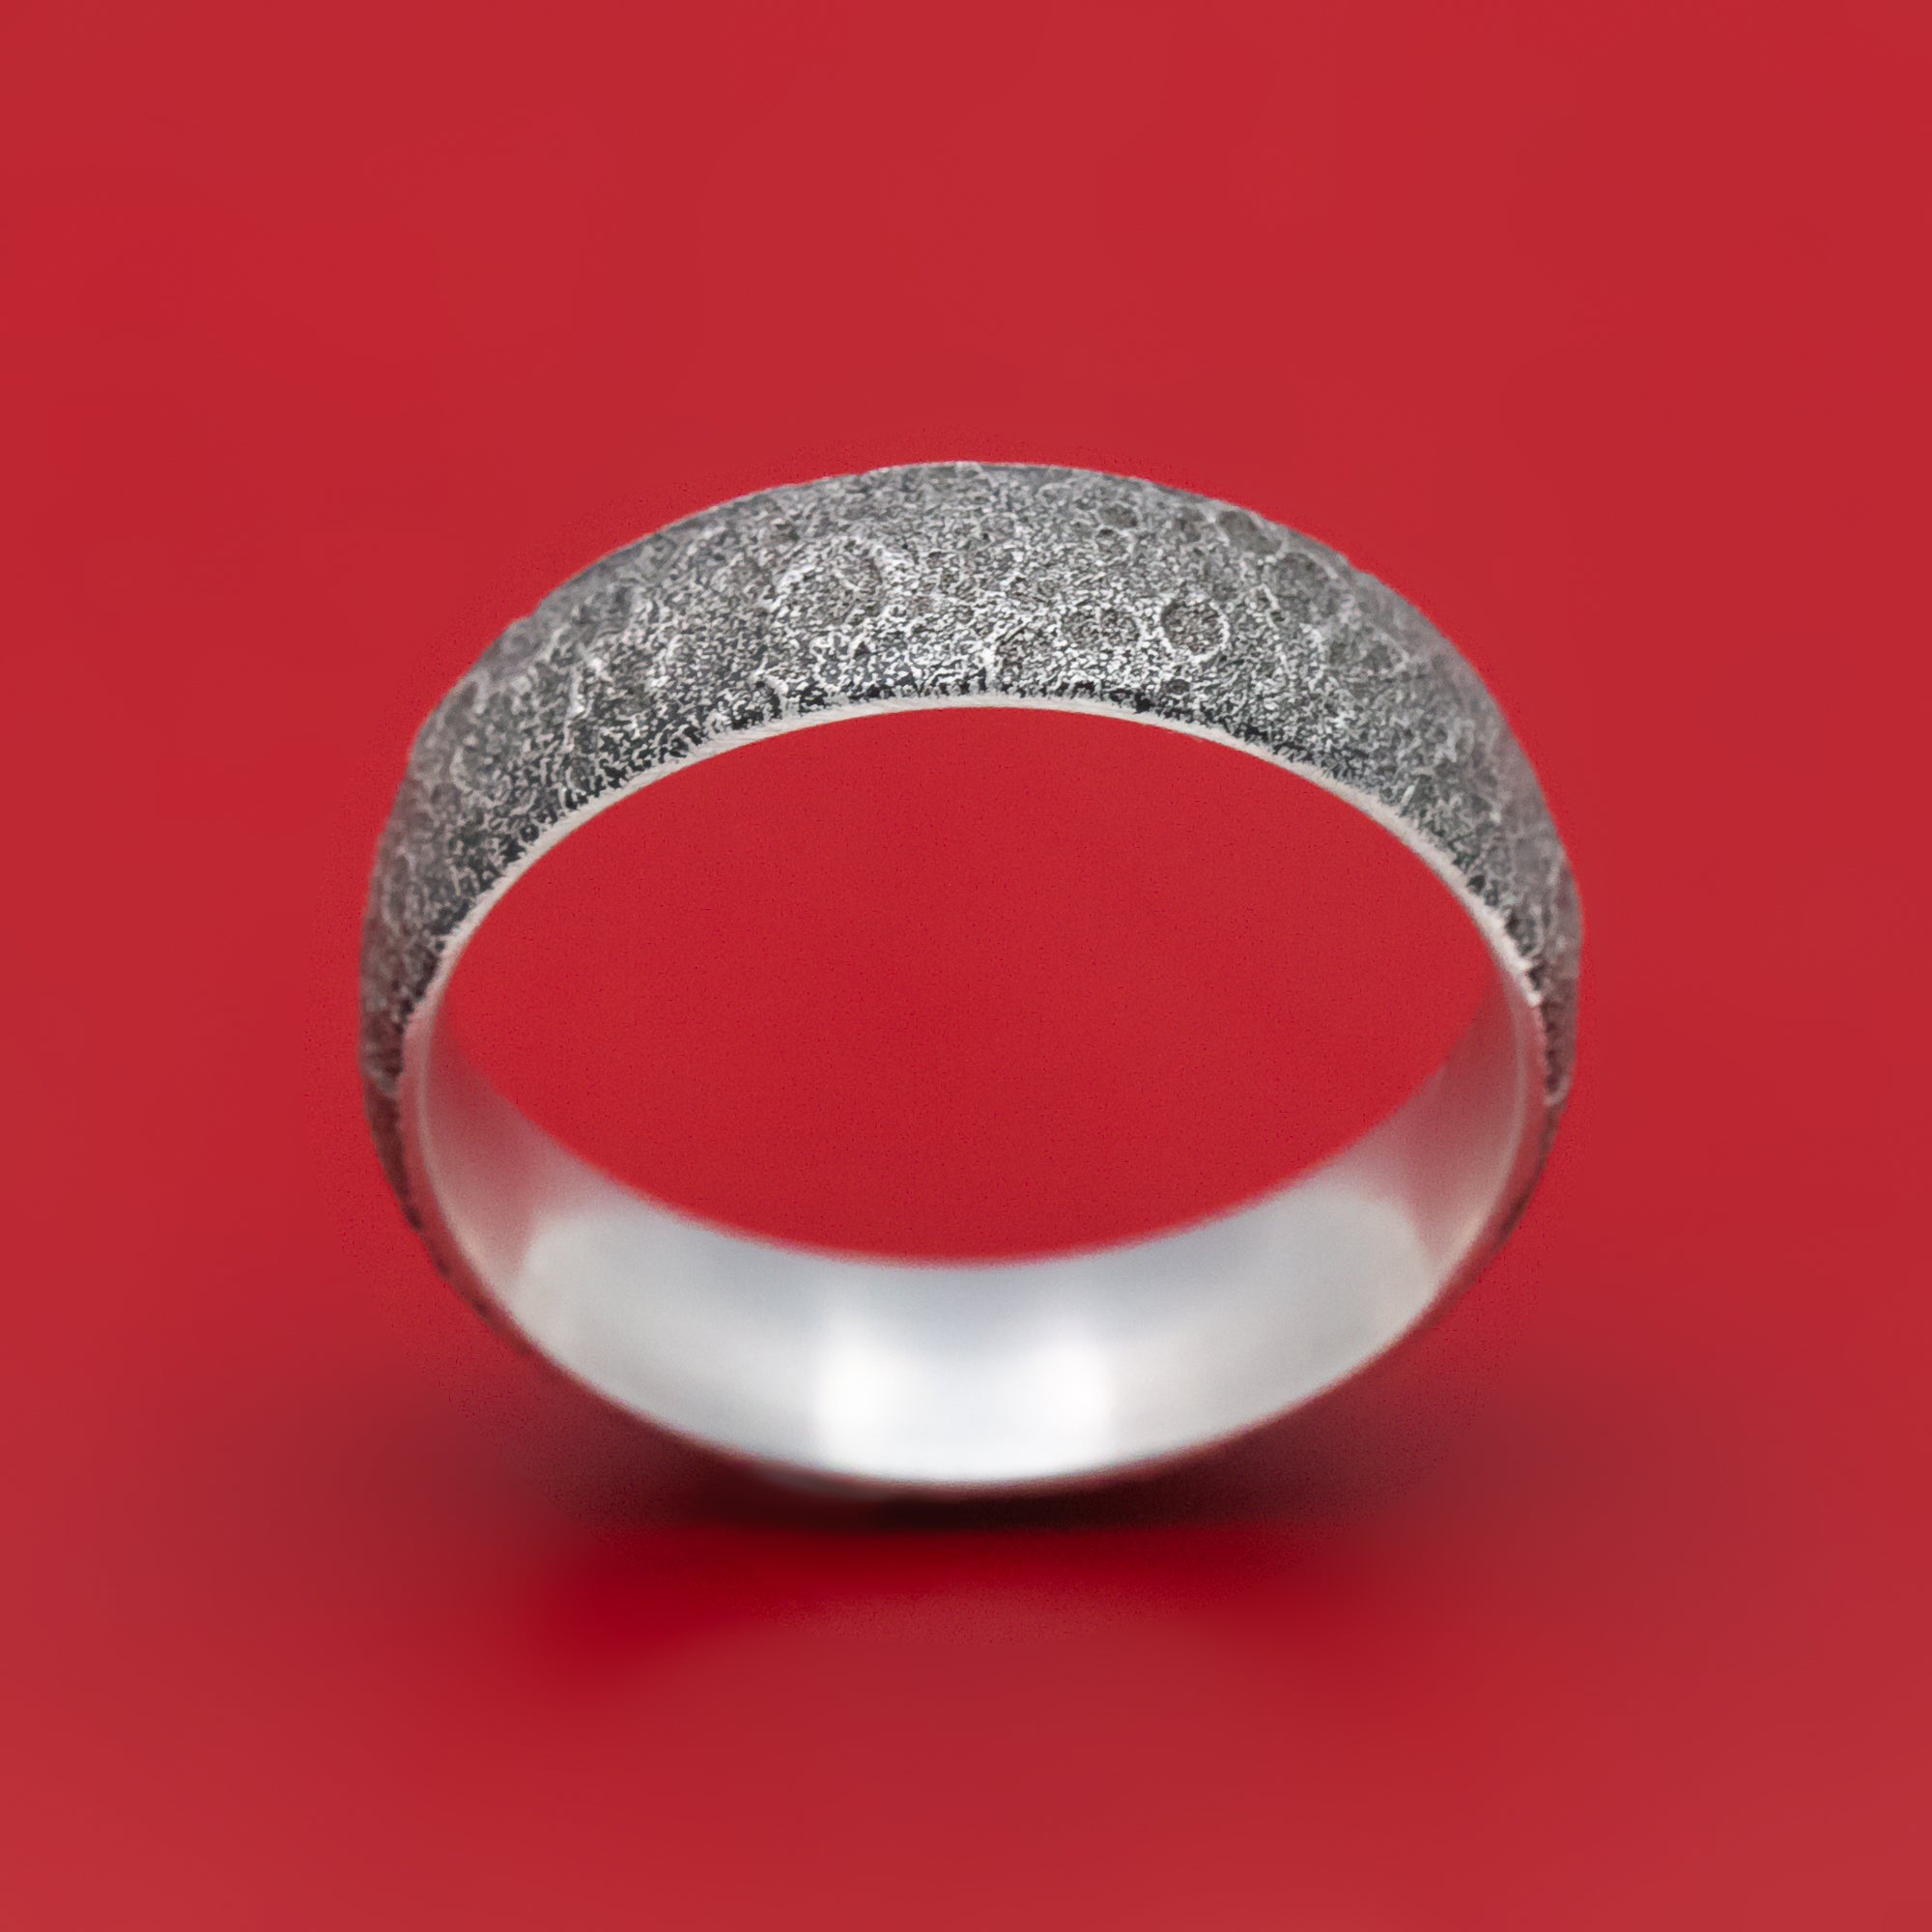 Wedding Rings Silver Image & Photo (Free Trial) | Bigstock